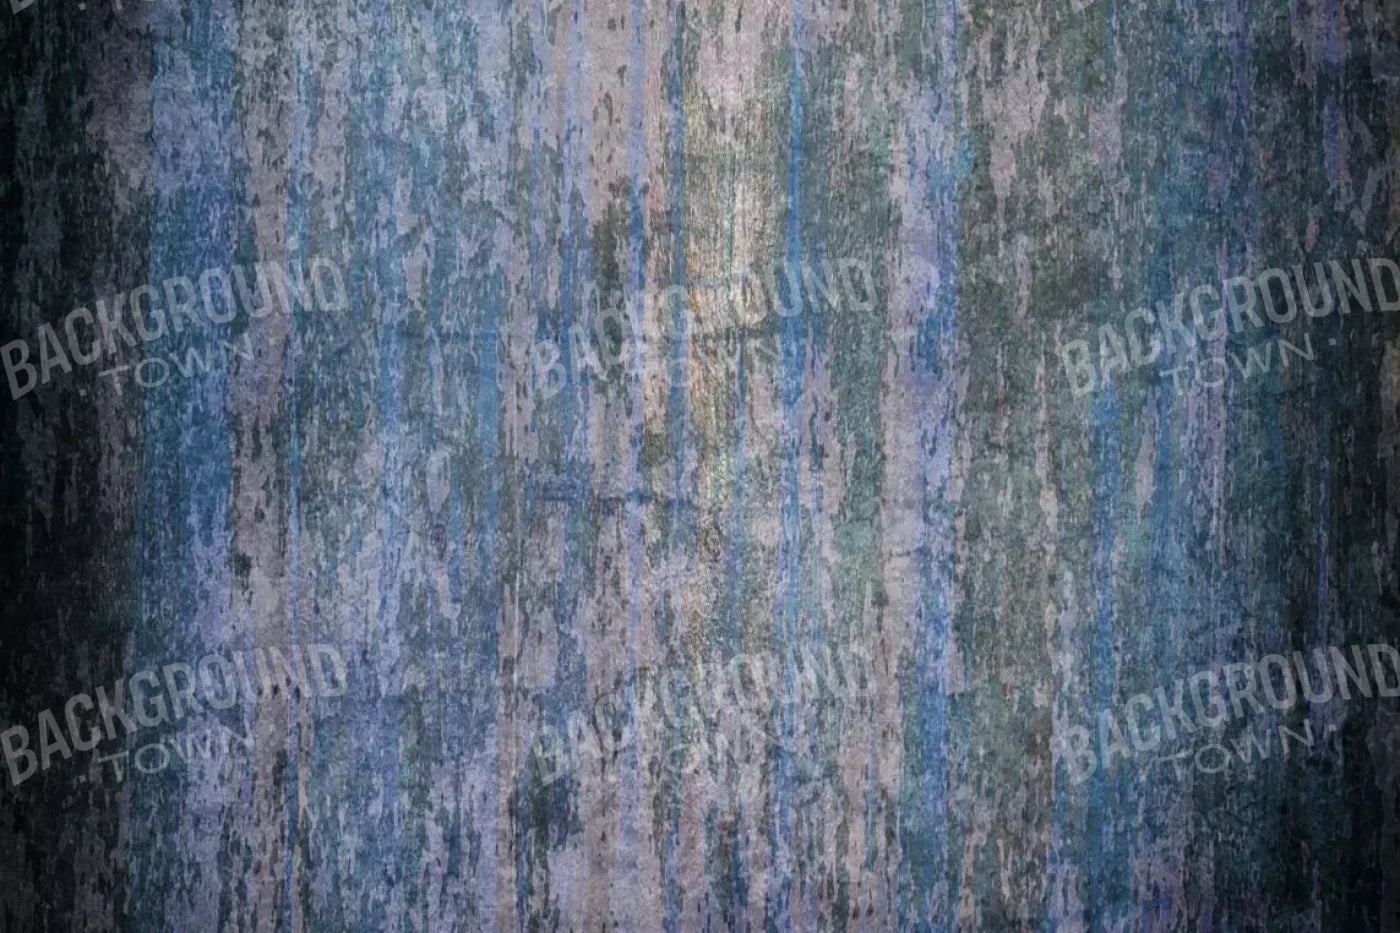 Blueblood 8X5 Ultracloth ( 96 X 60 Inch ) Backdrop